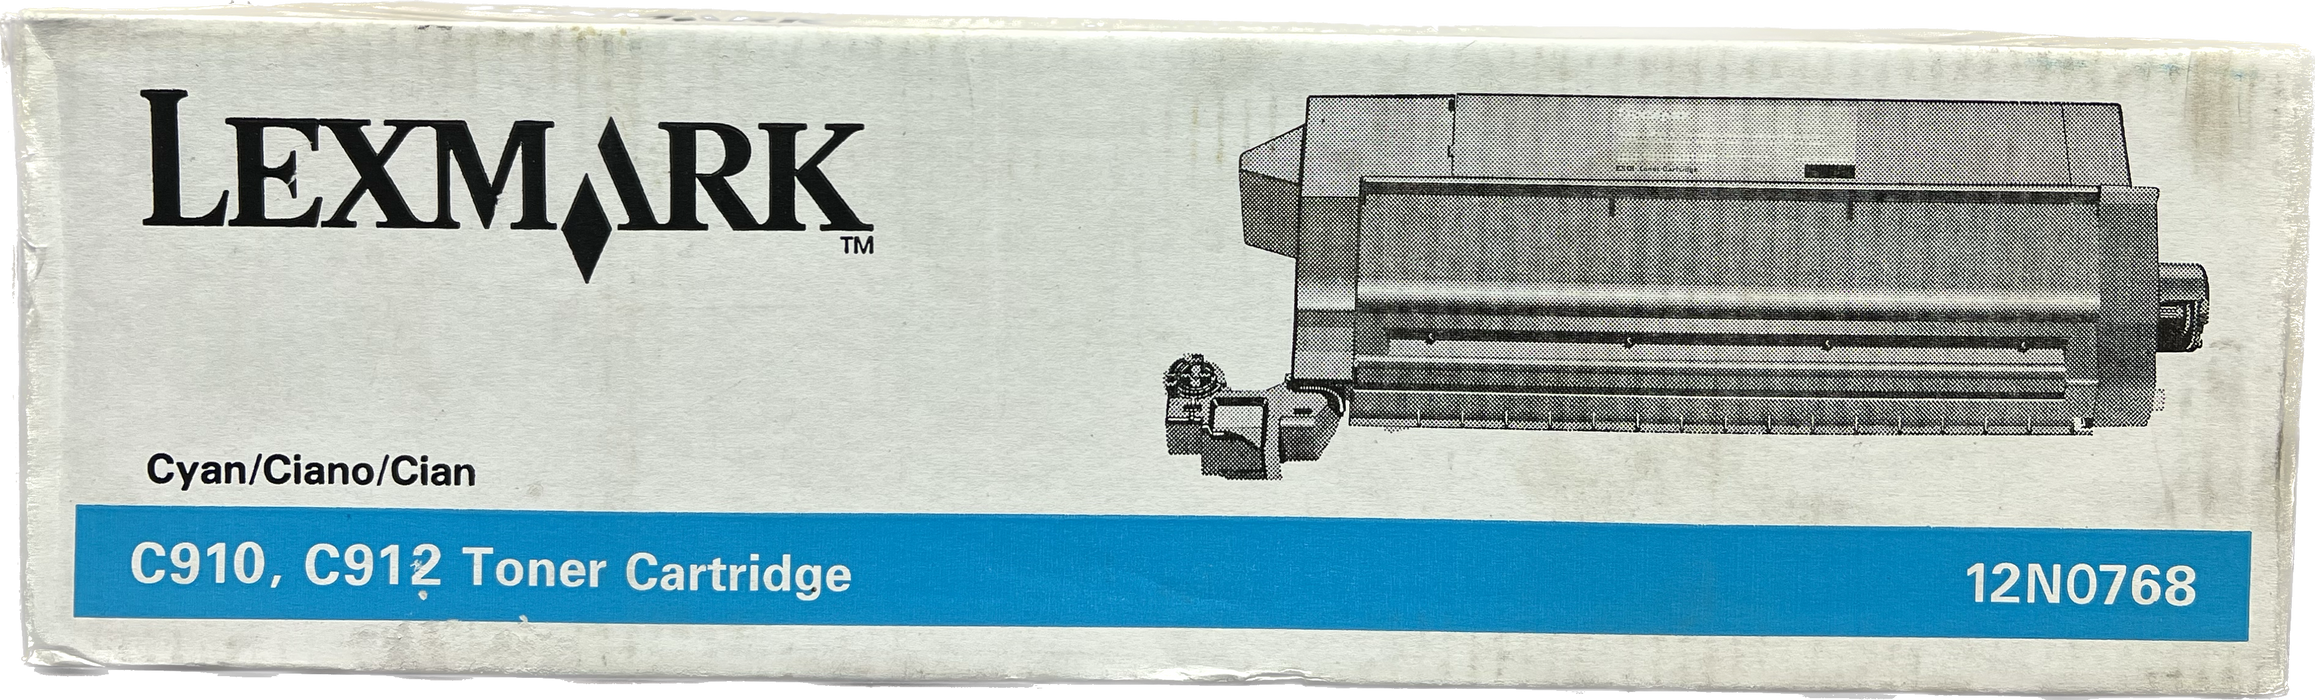 Genuine Lexmark Cyan Toner Cartridge | 12N0768 | C910, C912